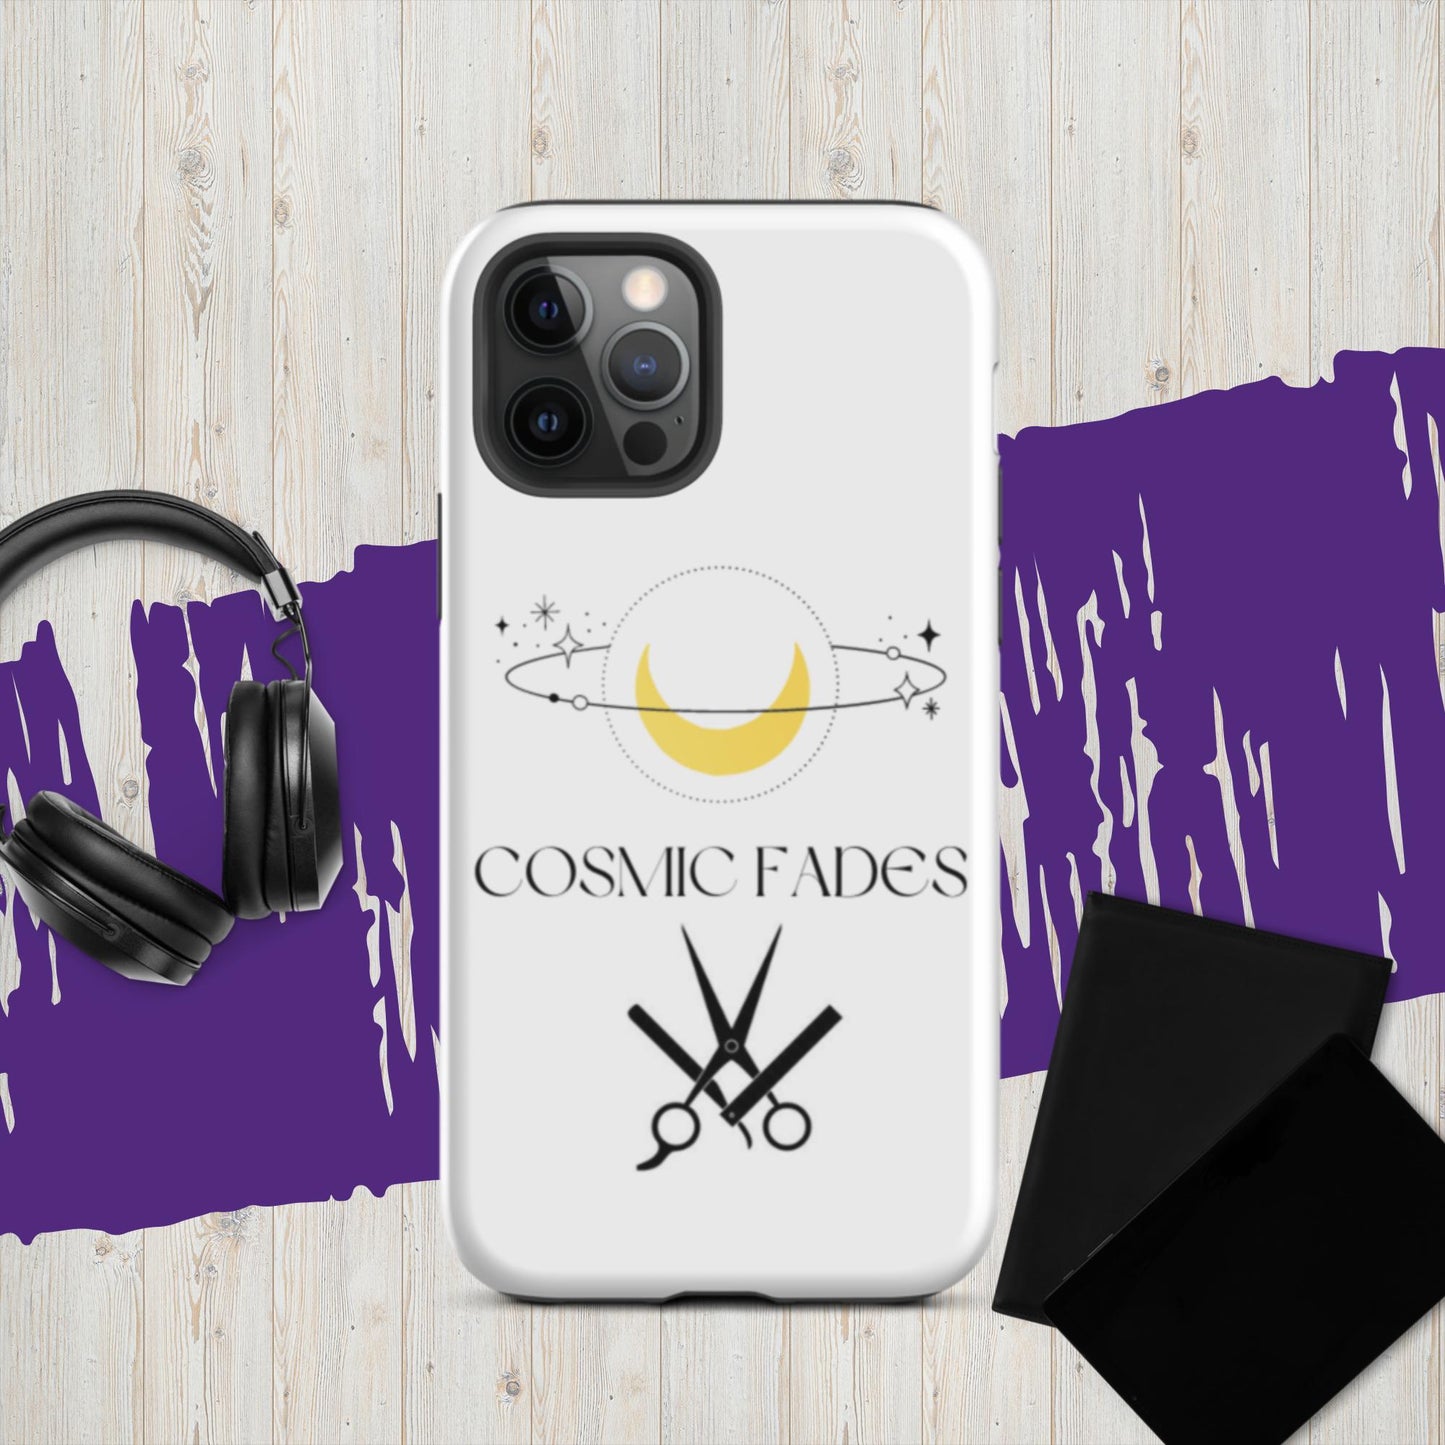 Tough Cosmic Fades iPhone case